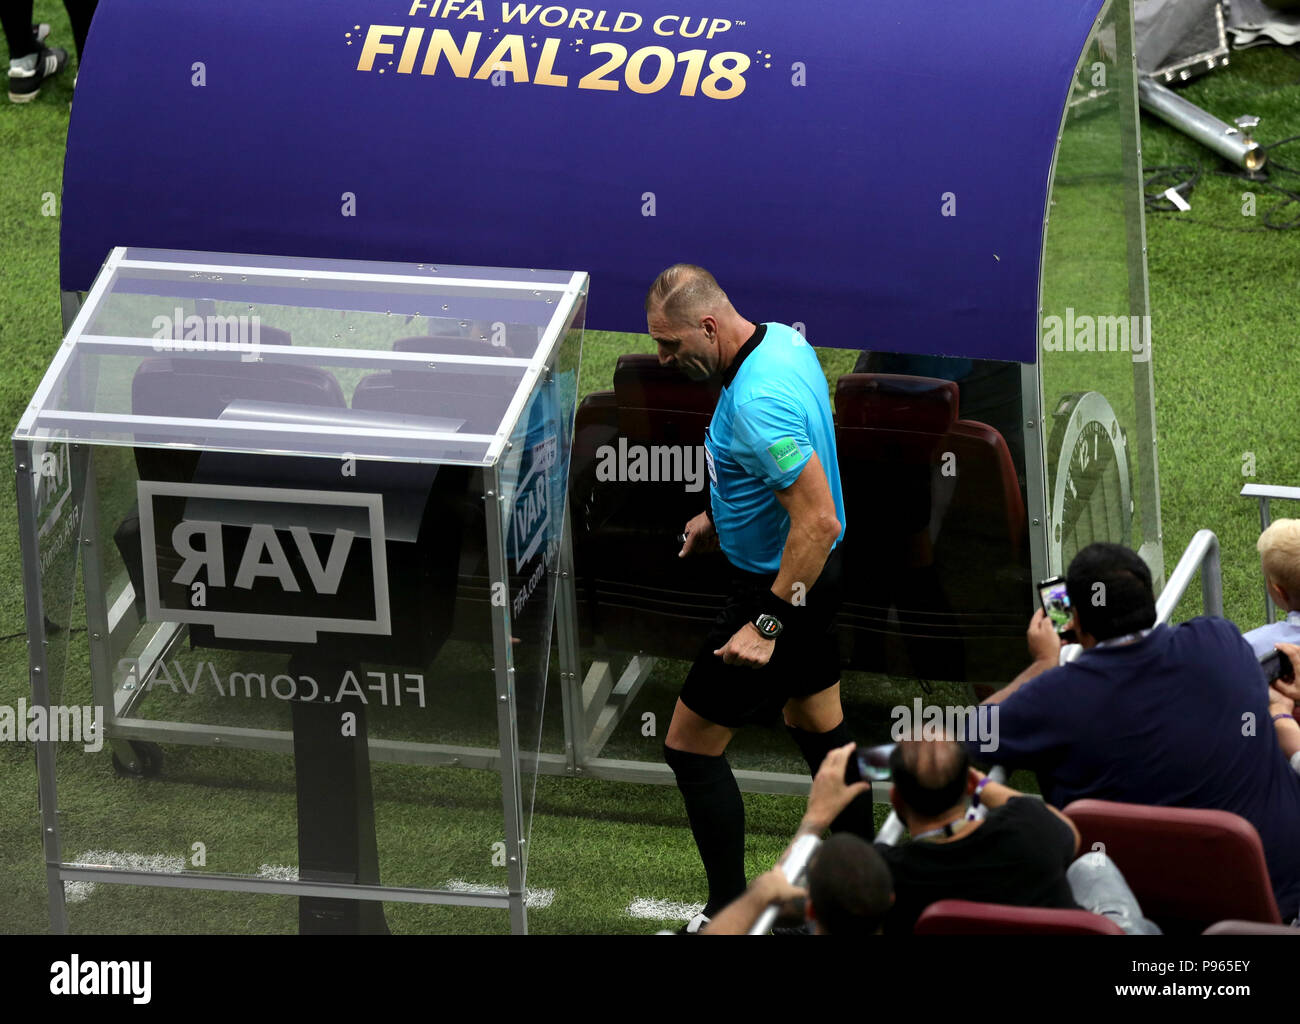 Match referee Nestor Pitana checks the VAR System during the FIFA World Cup Final at the Luzhniki Stadium, Moscow. Stock Photo